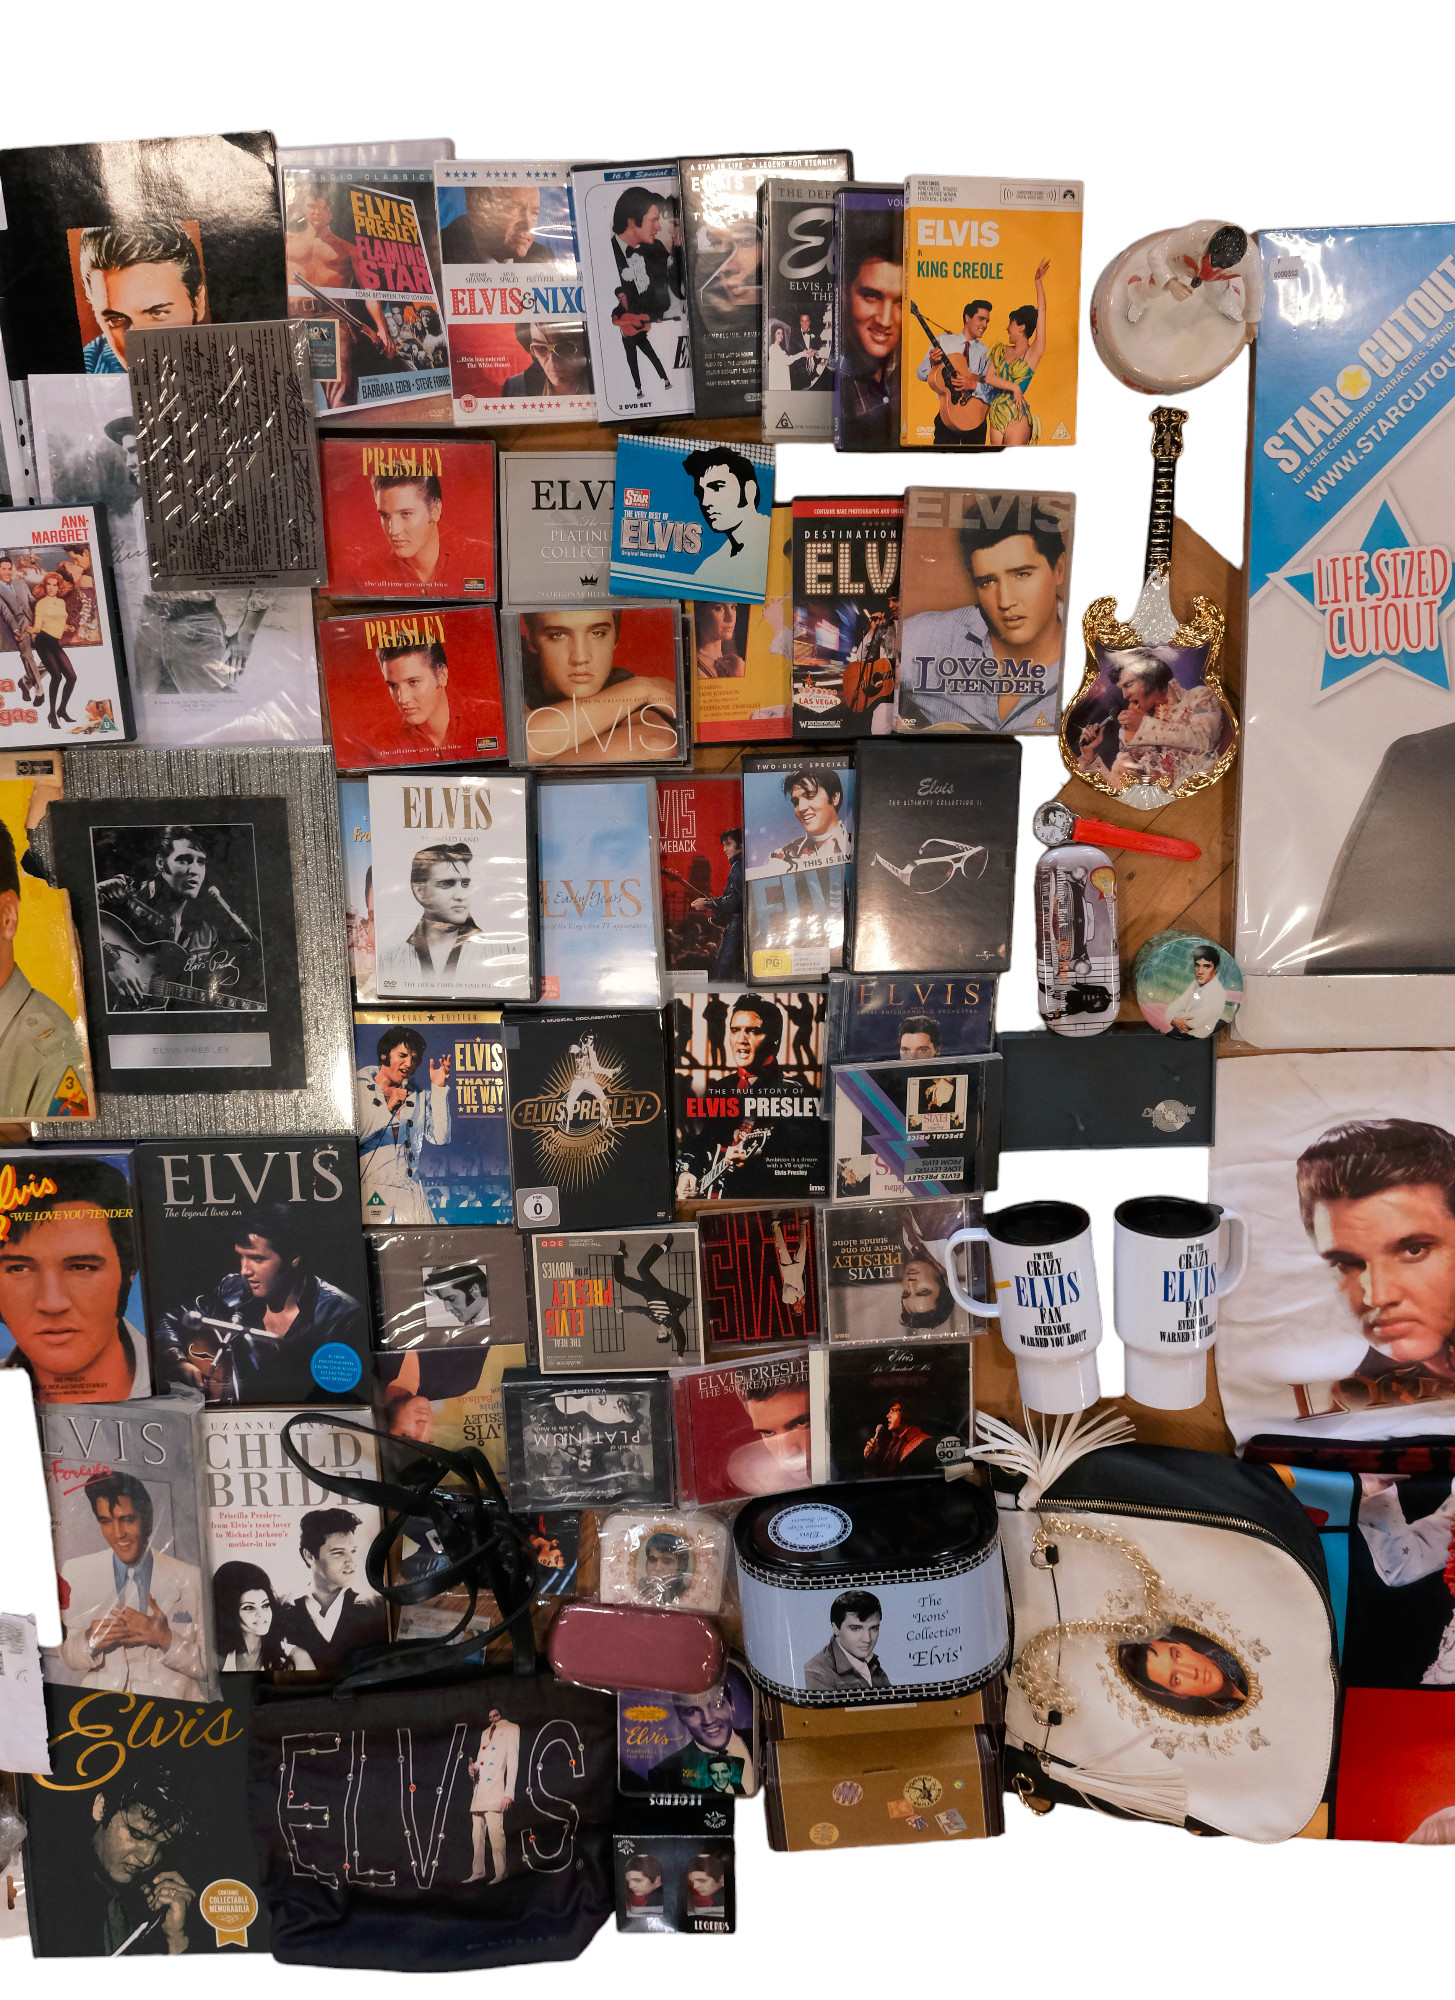 A large collection of Elvis Presley memorabilia including vinyl records, ceramics, CDs, books, - Image 4 of 4